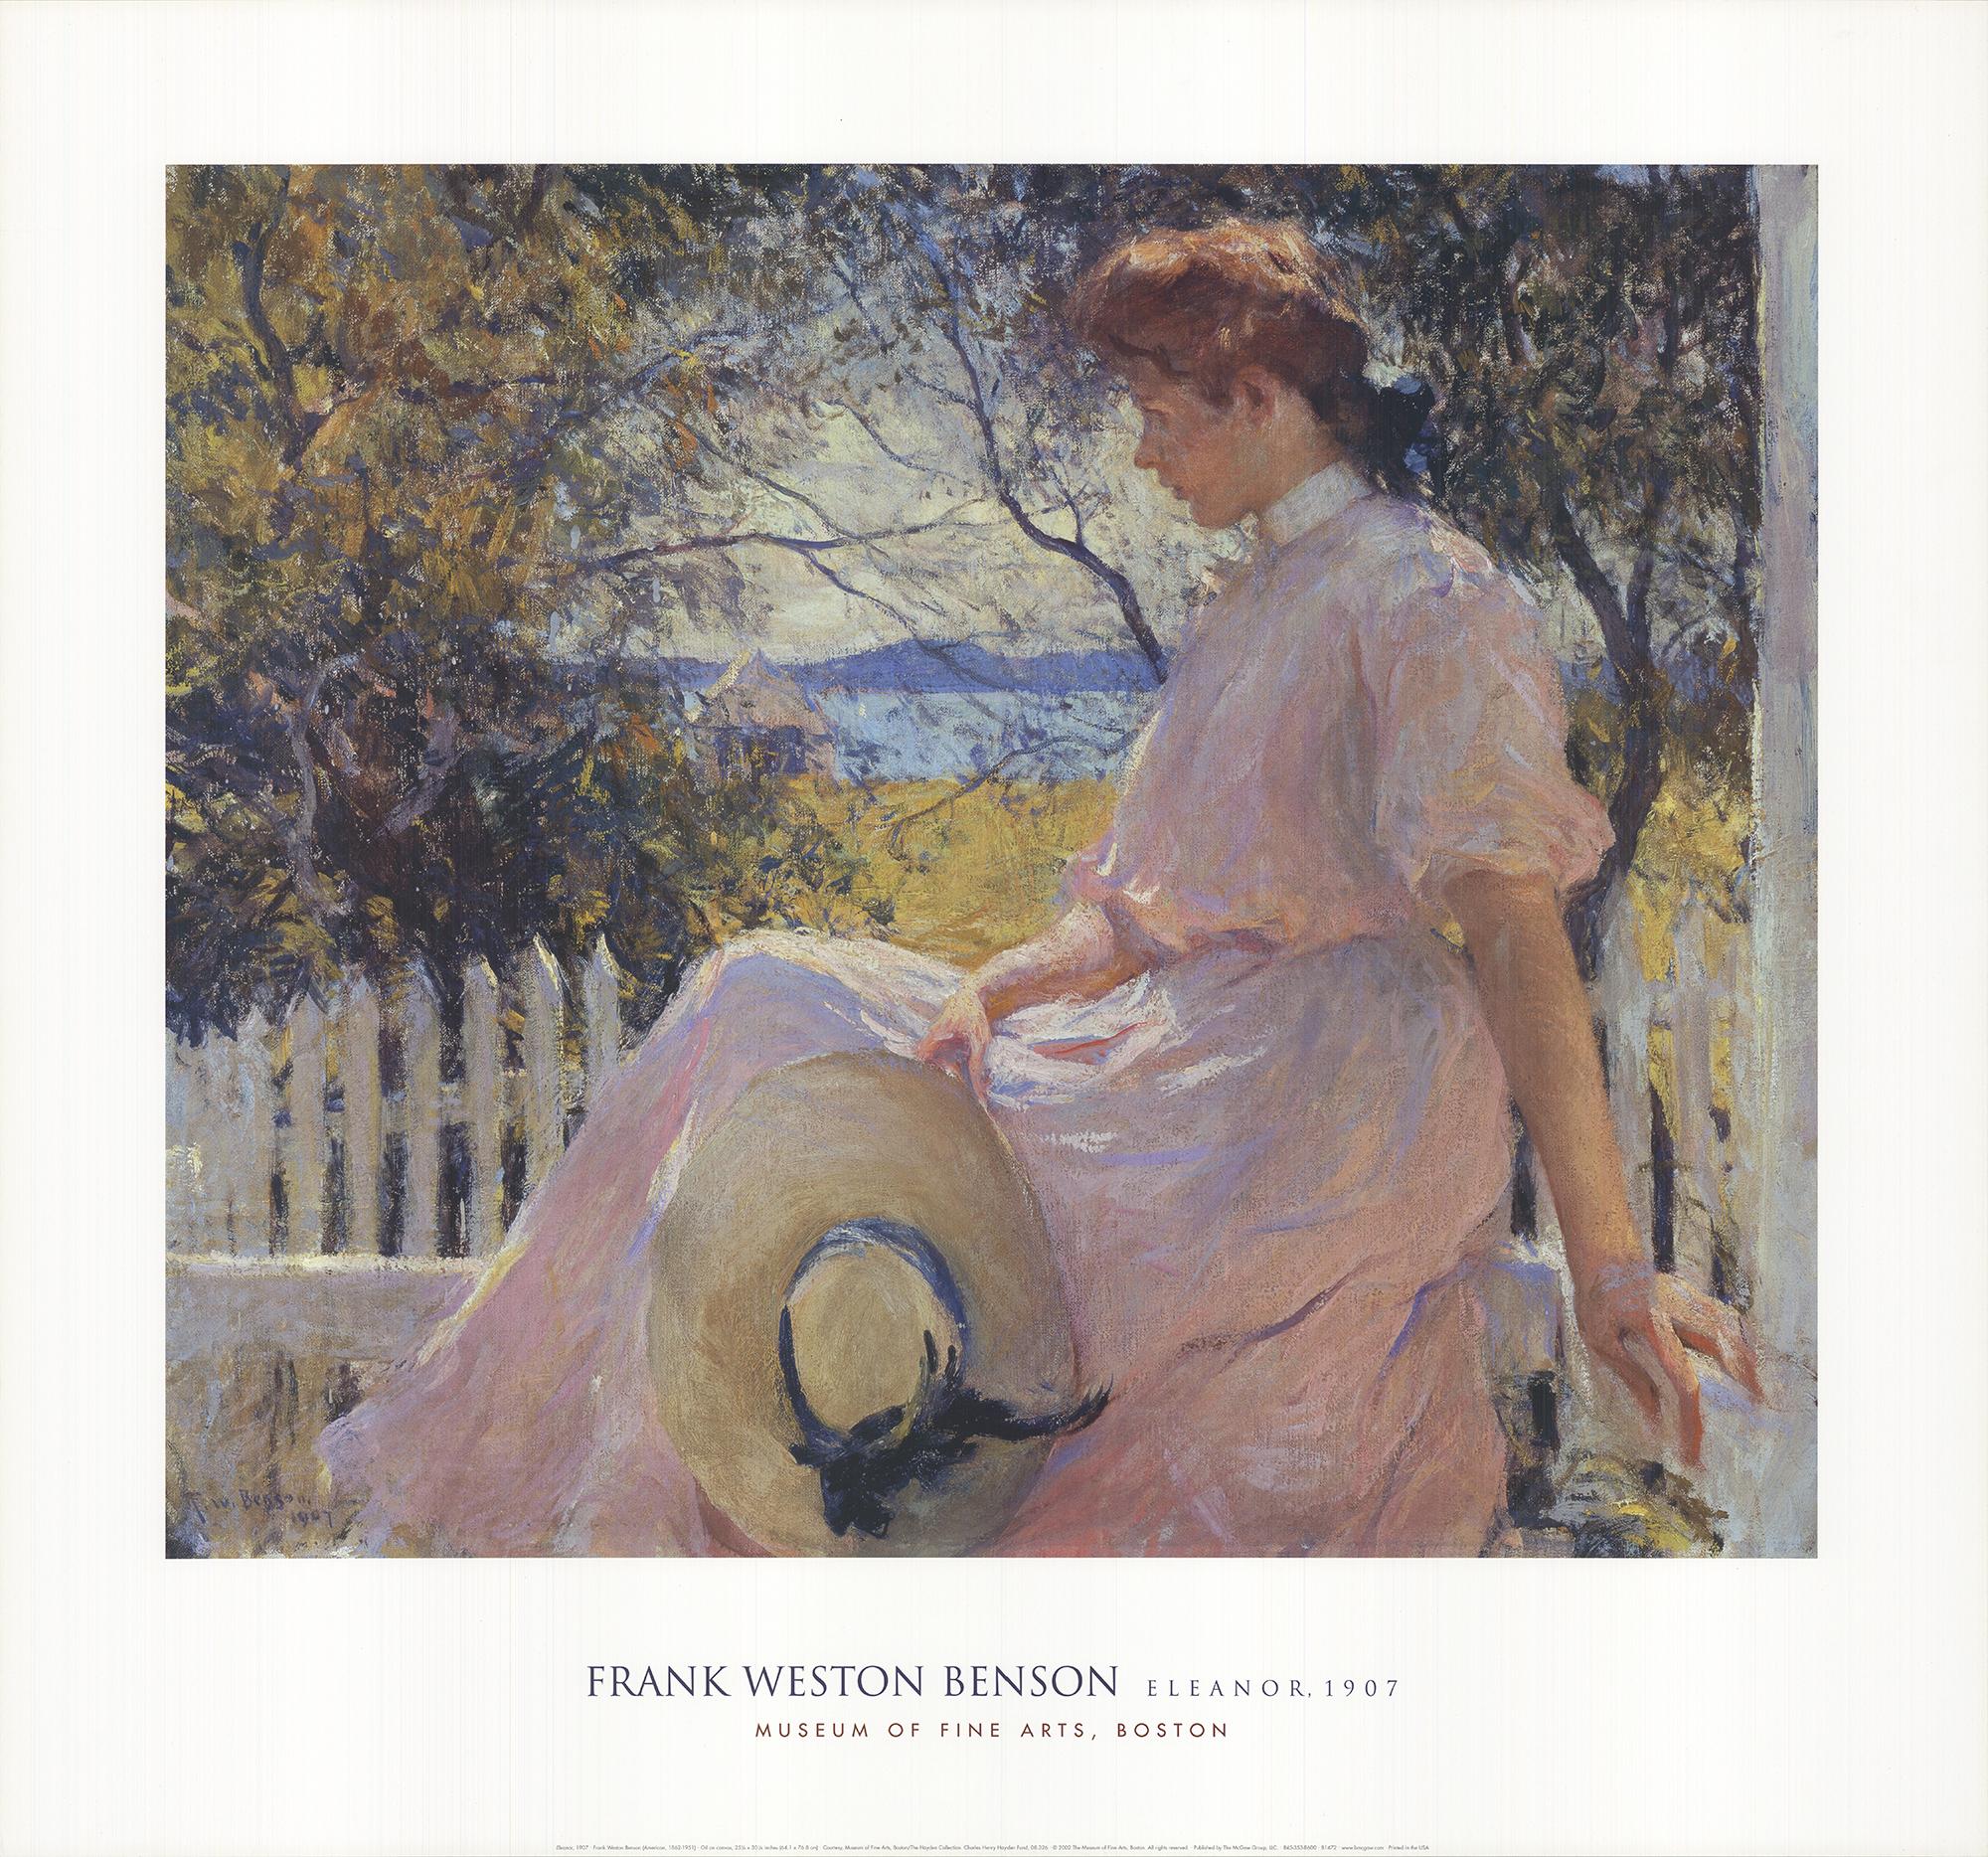 After FRANK WESTON BENSON Eleanor 28" x 30" Poster - 2002 Impressionism Pink - Print by Frank Weston Benson